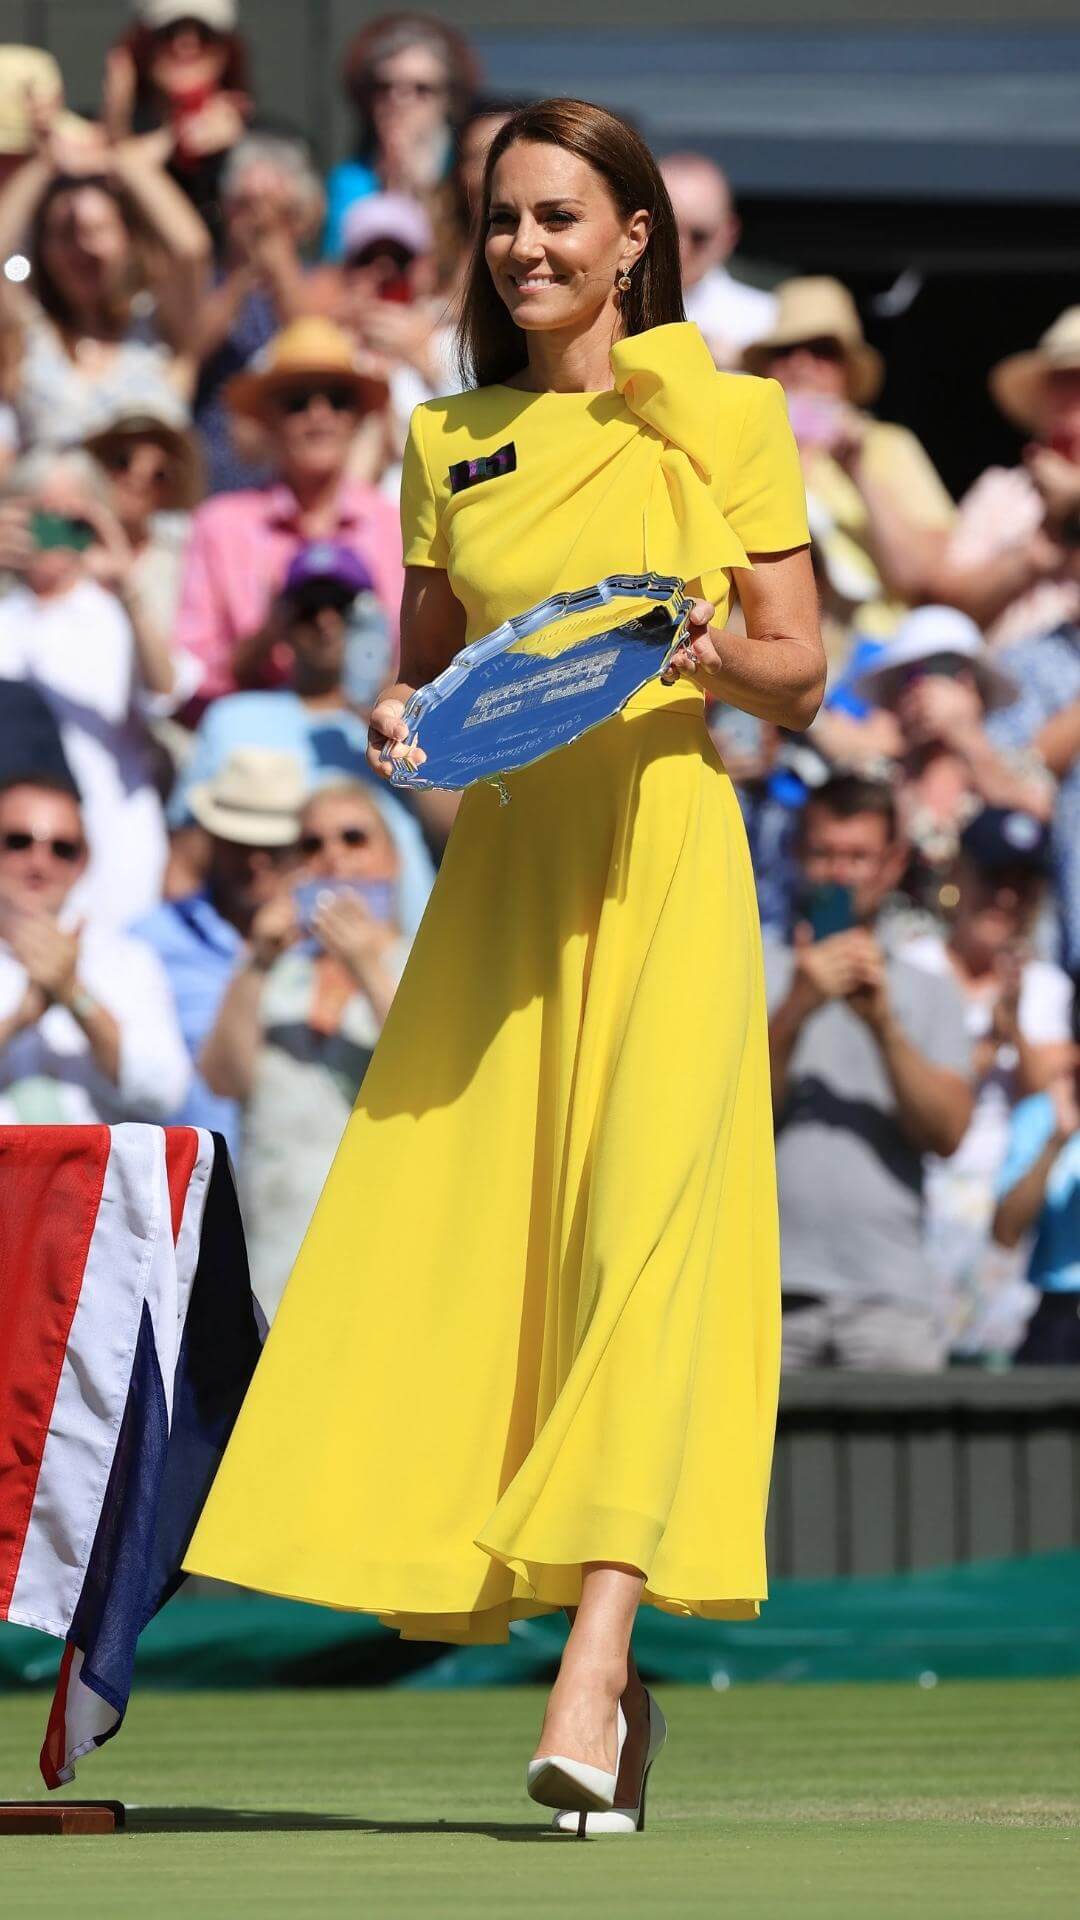 Royal elegance Kate Middleton's tennis outfit